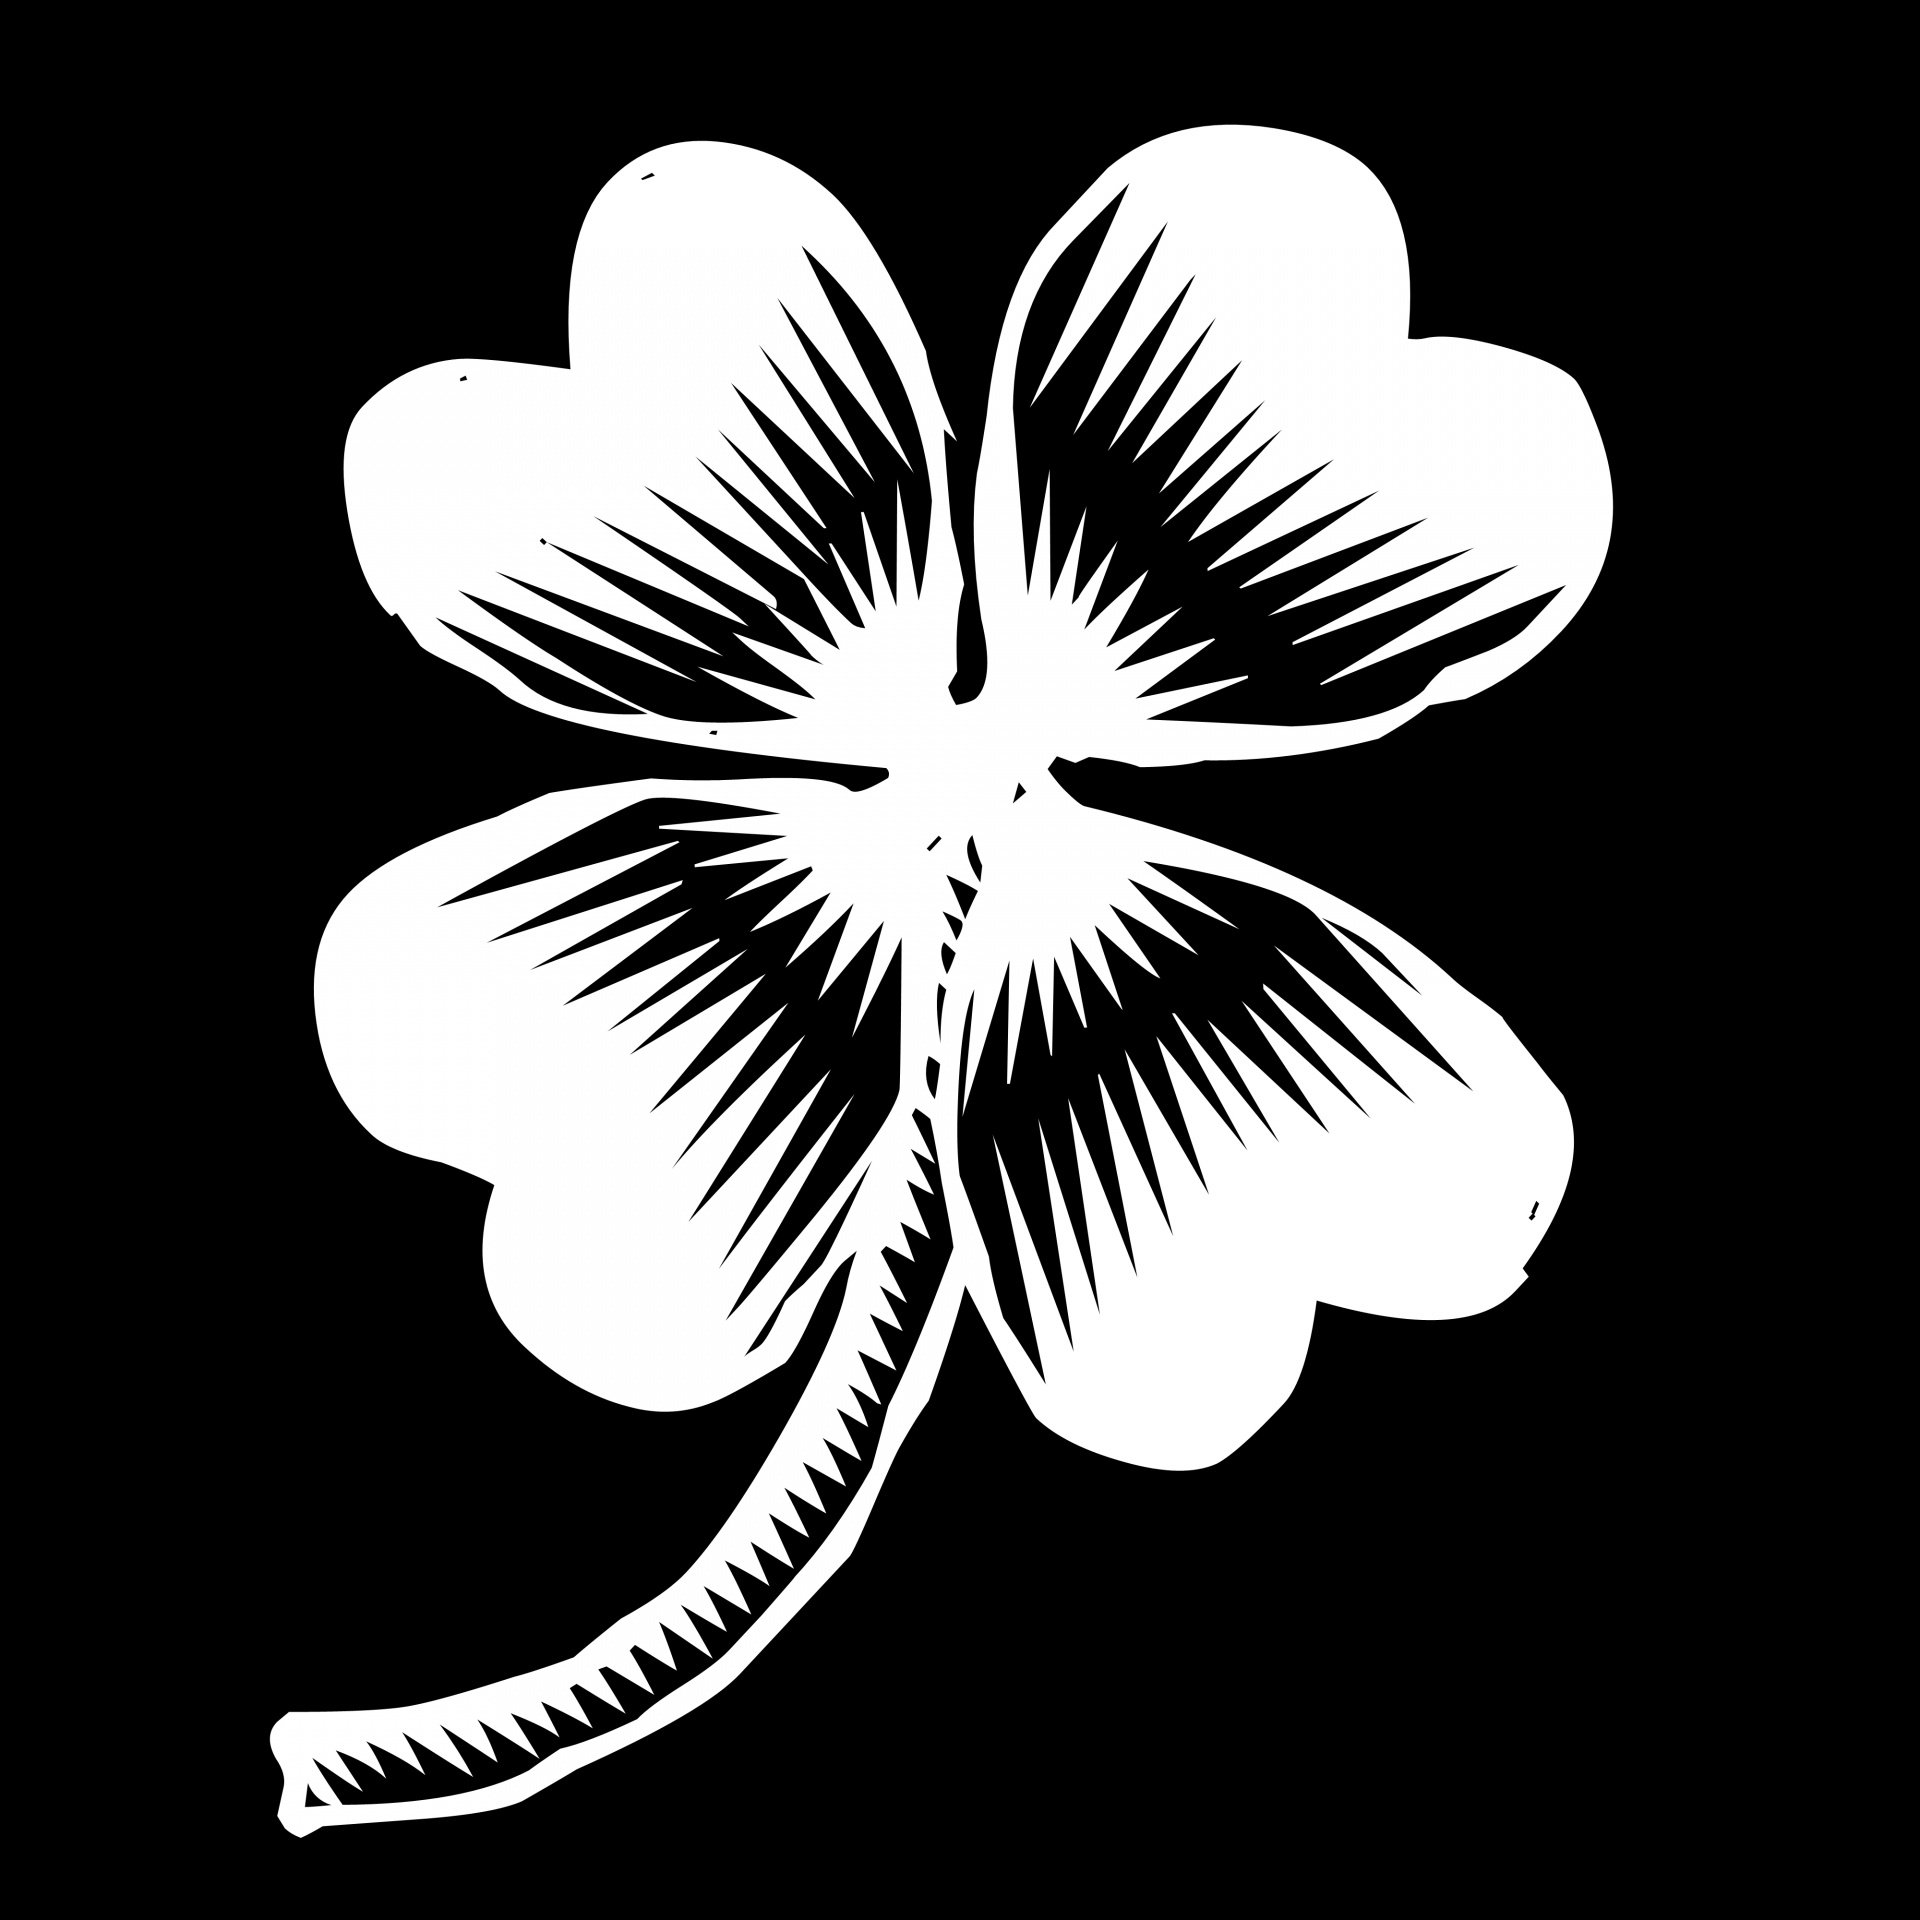 128 х 9. Черный Клевер четырехлистный. Черный Клевер четырехлистник. Клевер четырехлистник черно белый. Черный Клевер цветок.